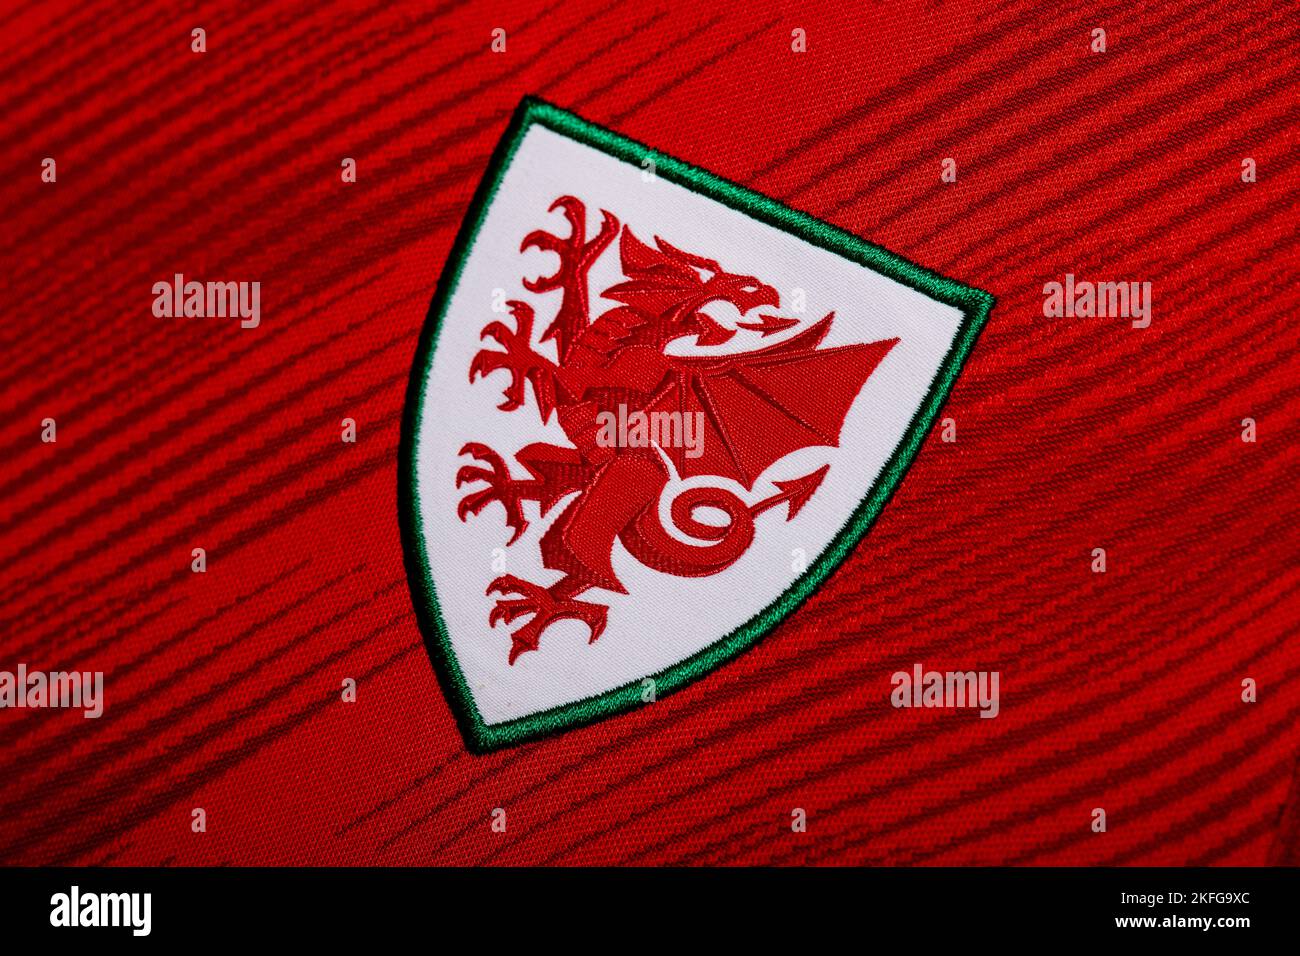 Wales national football team, Football Wiki